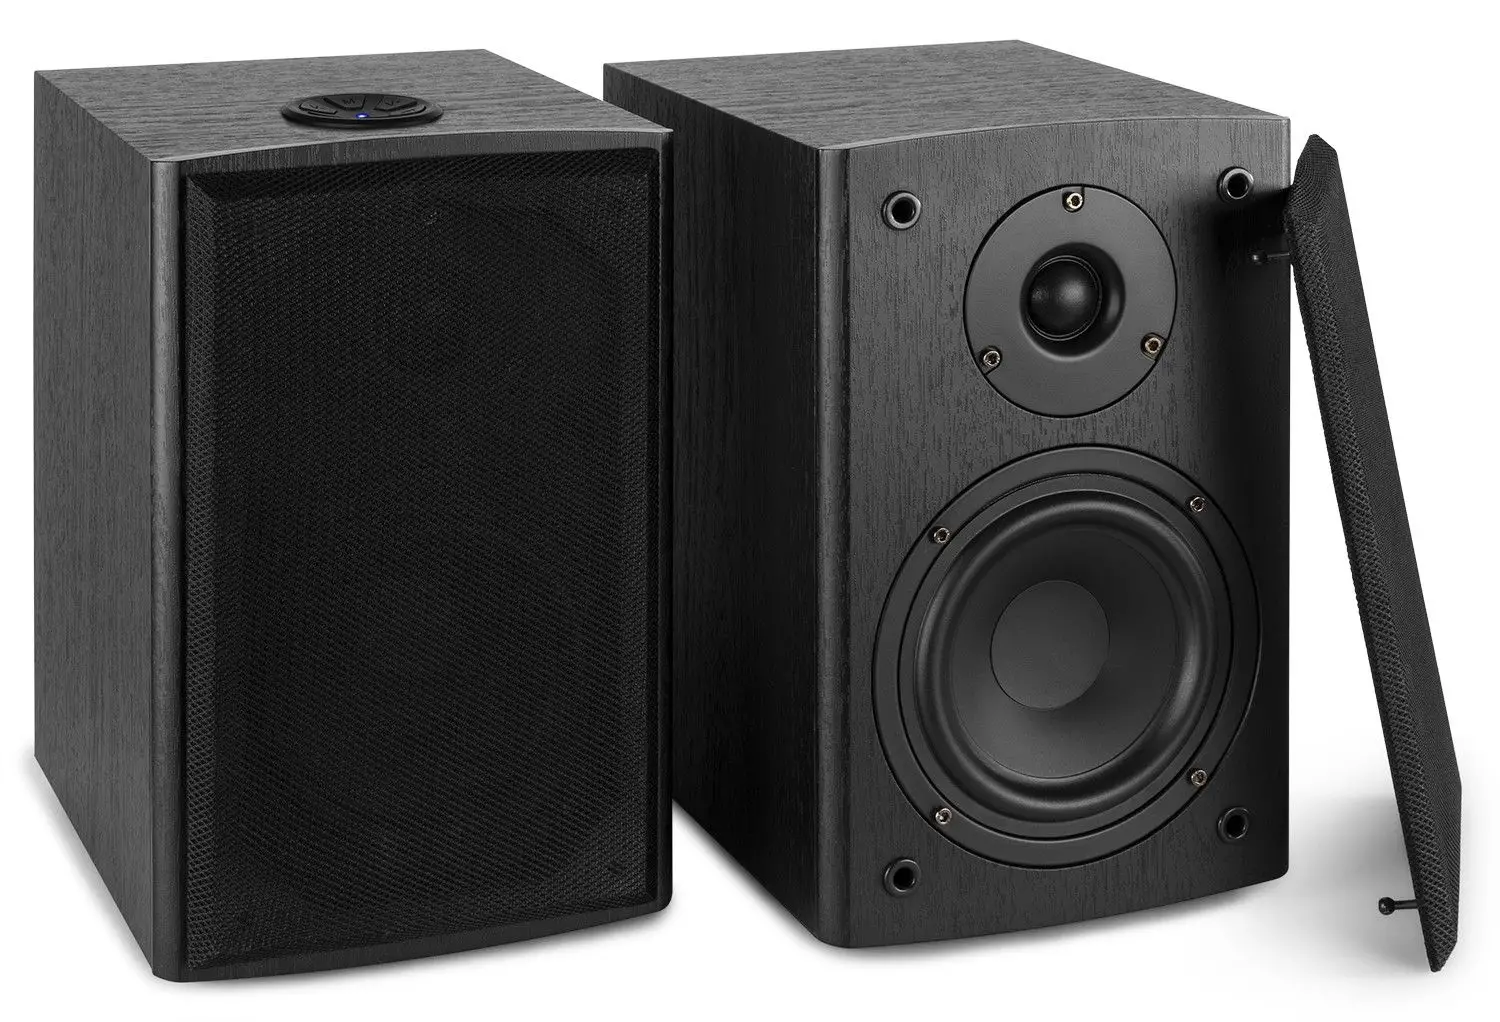 Fenton shf505b speakers voor pc 80w met bluetooth en mp3 speler